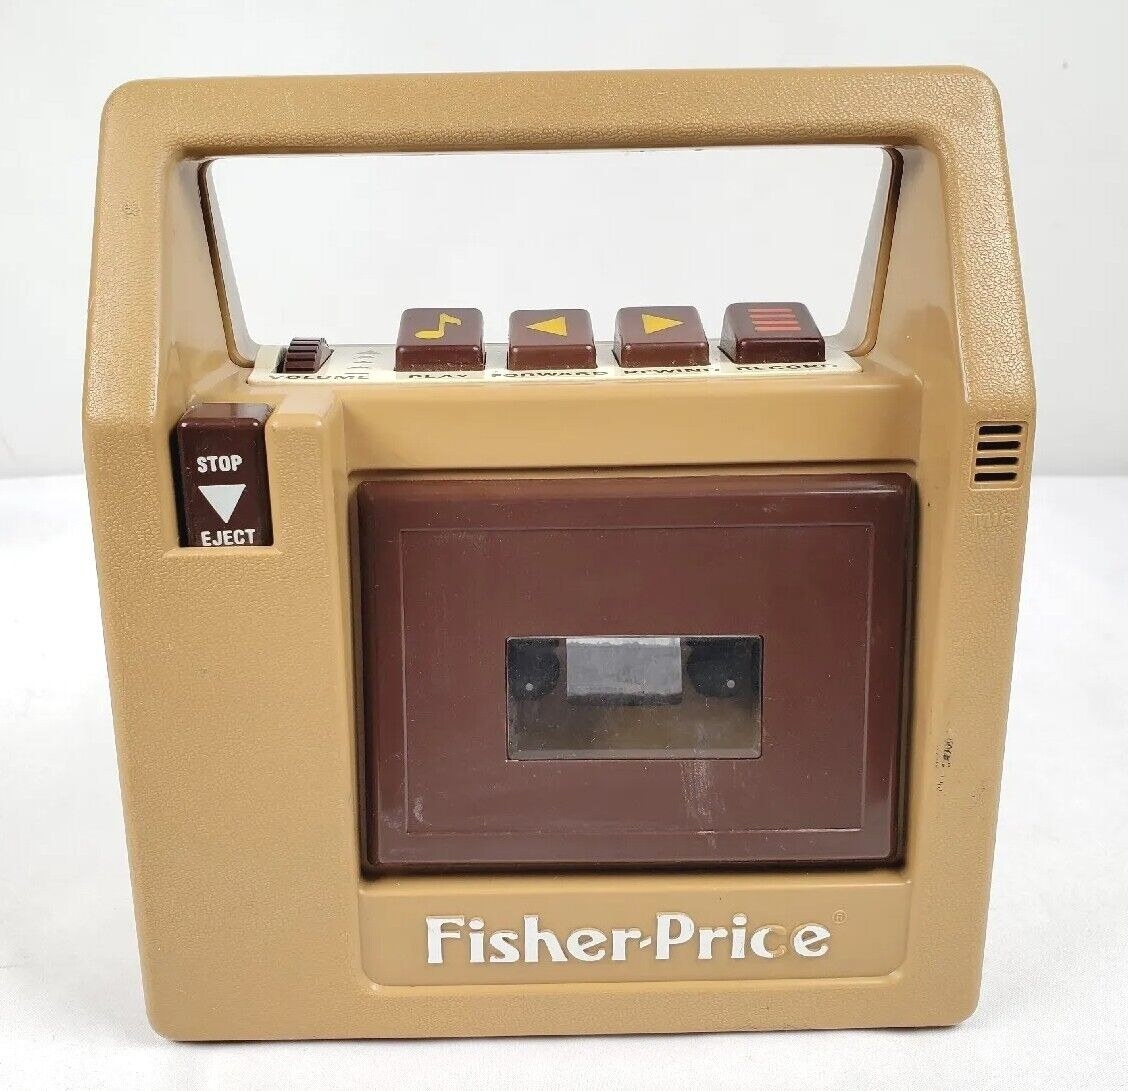 Fisher-Price tape recorder